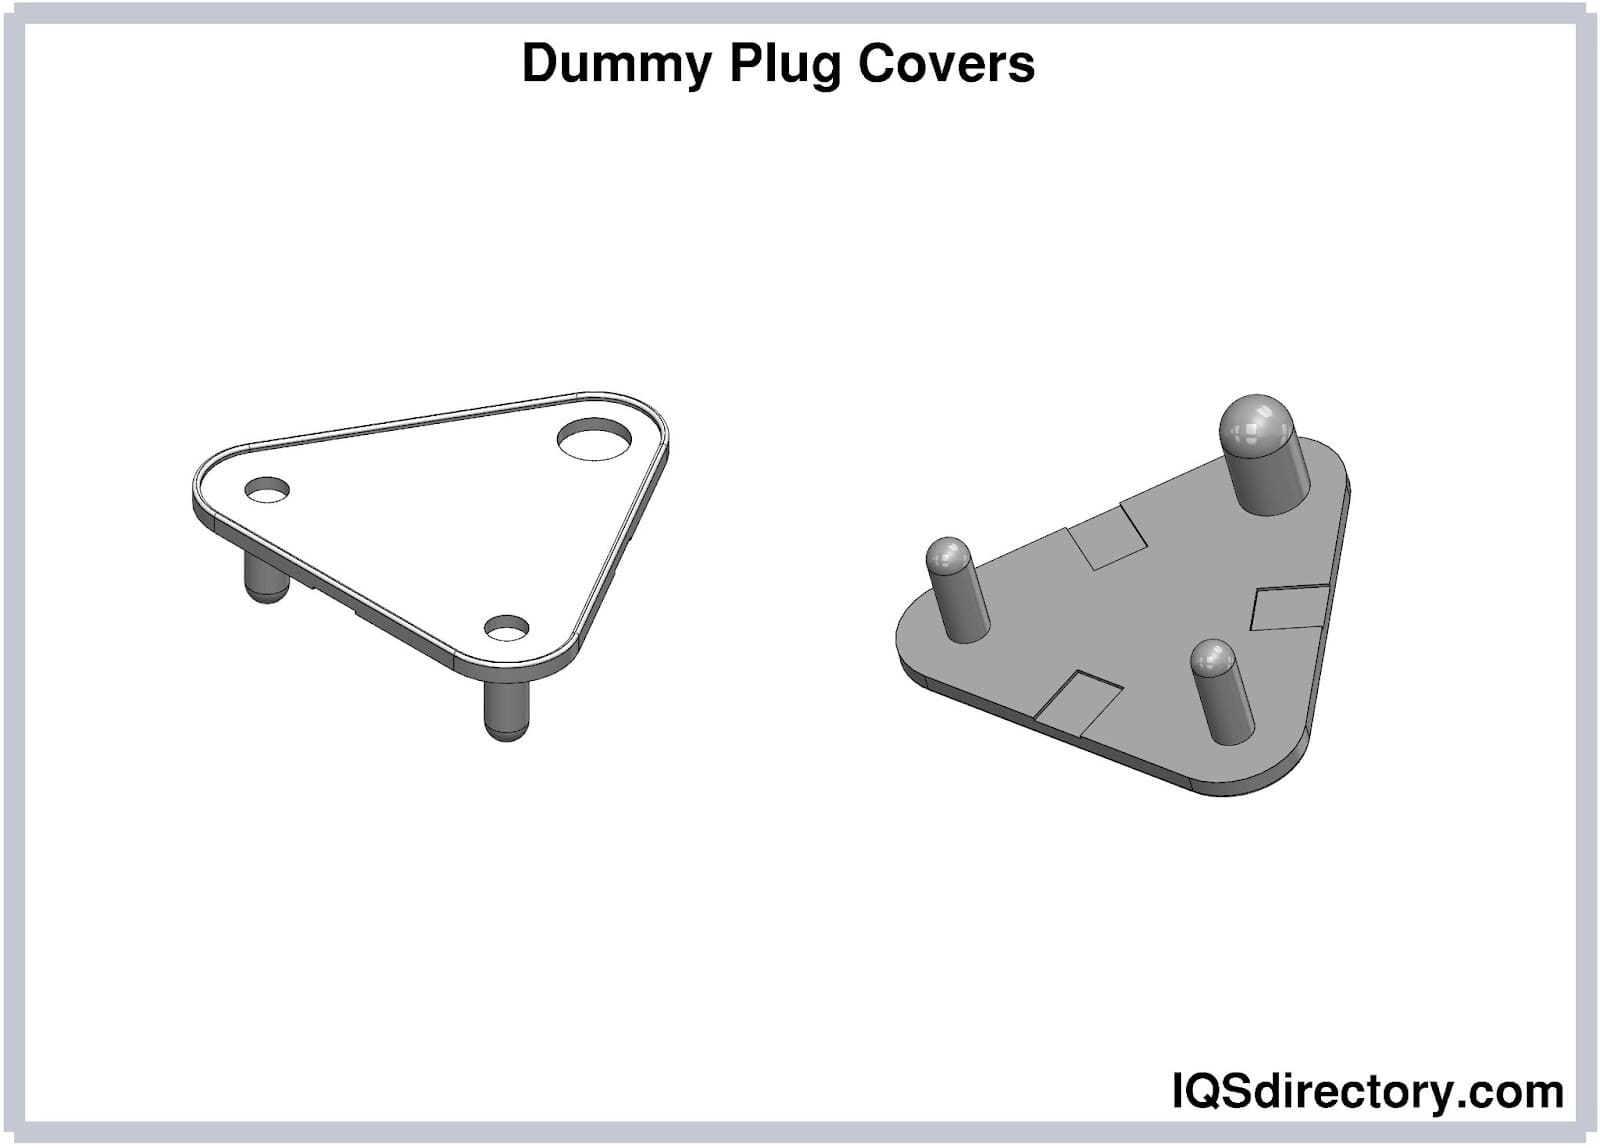 Dummy Plug Covers